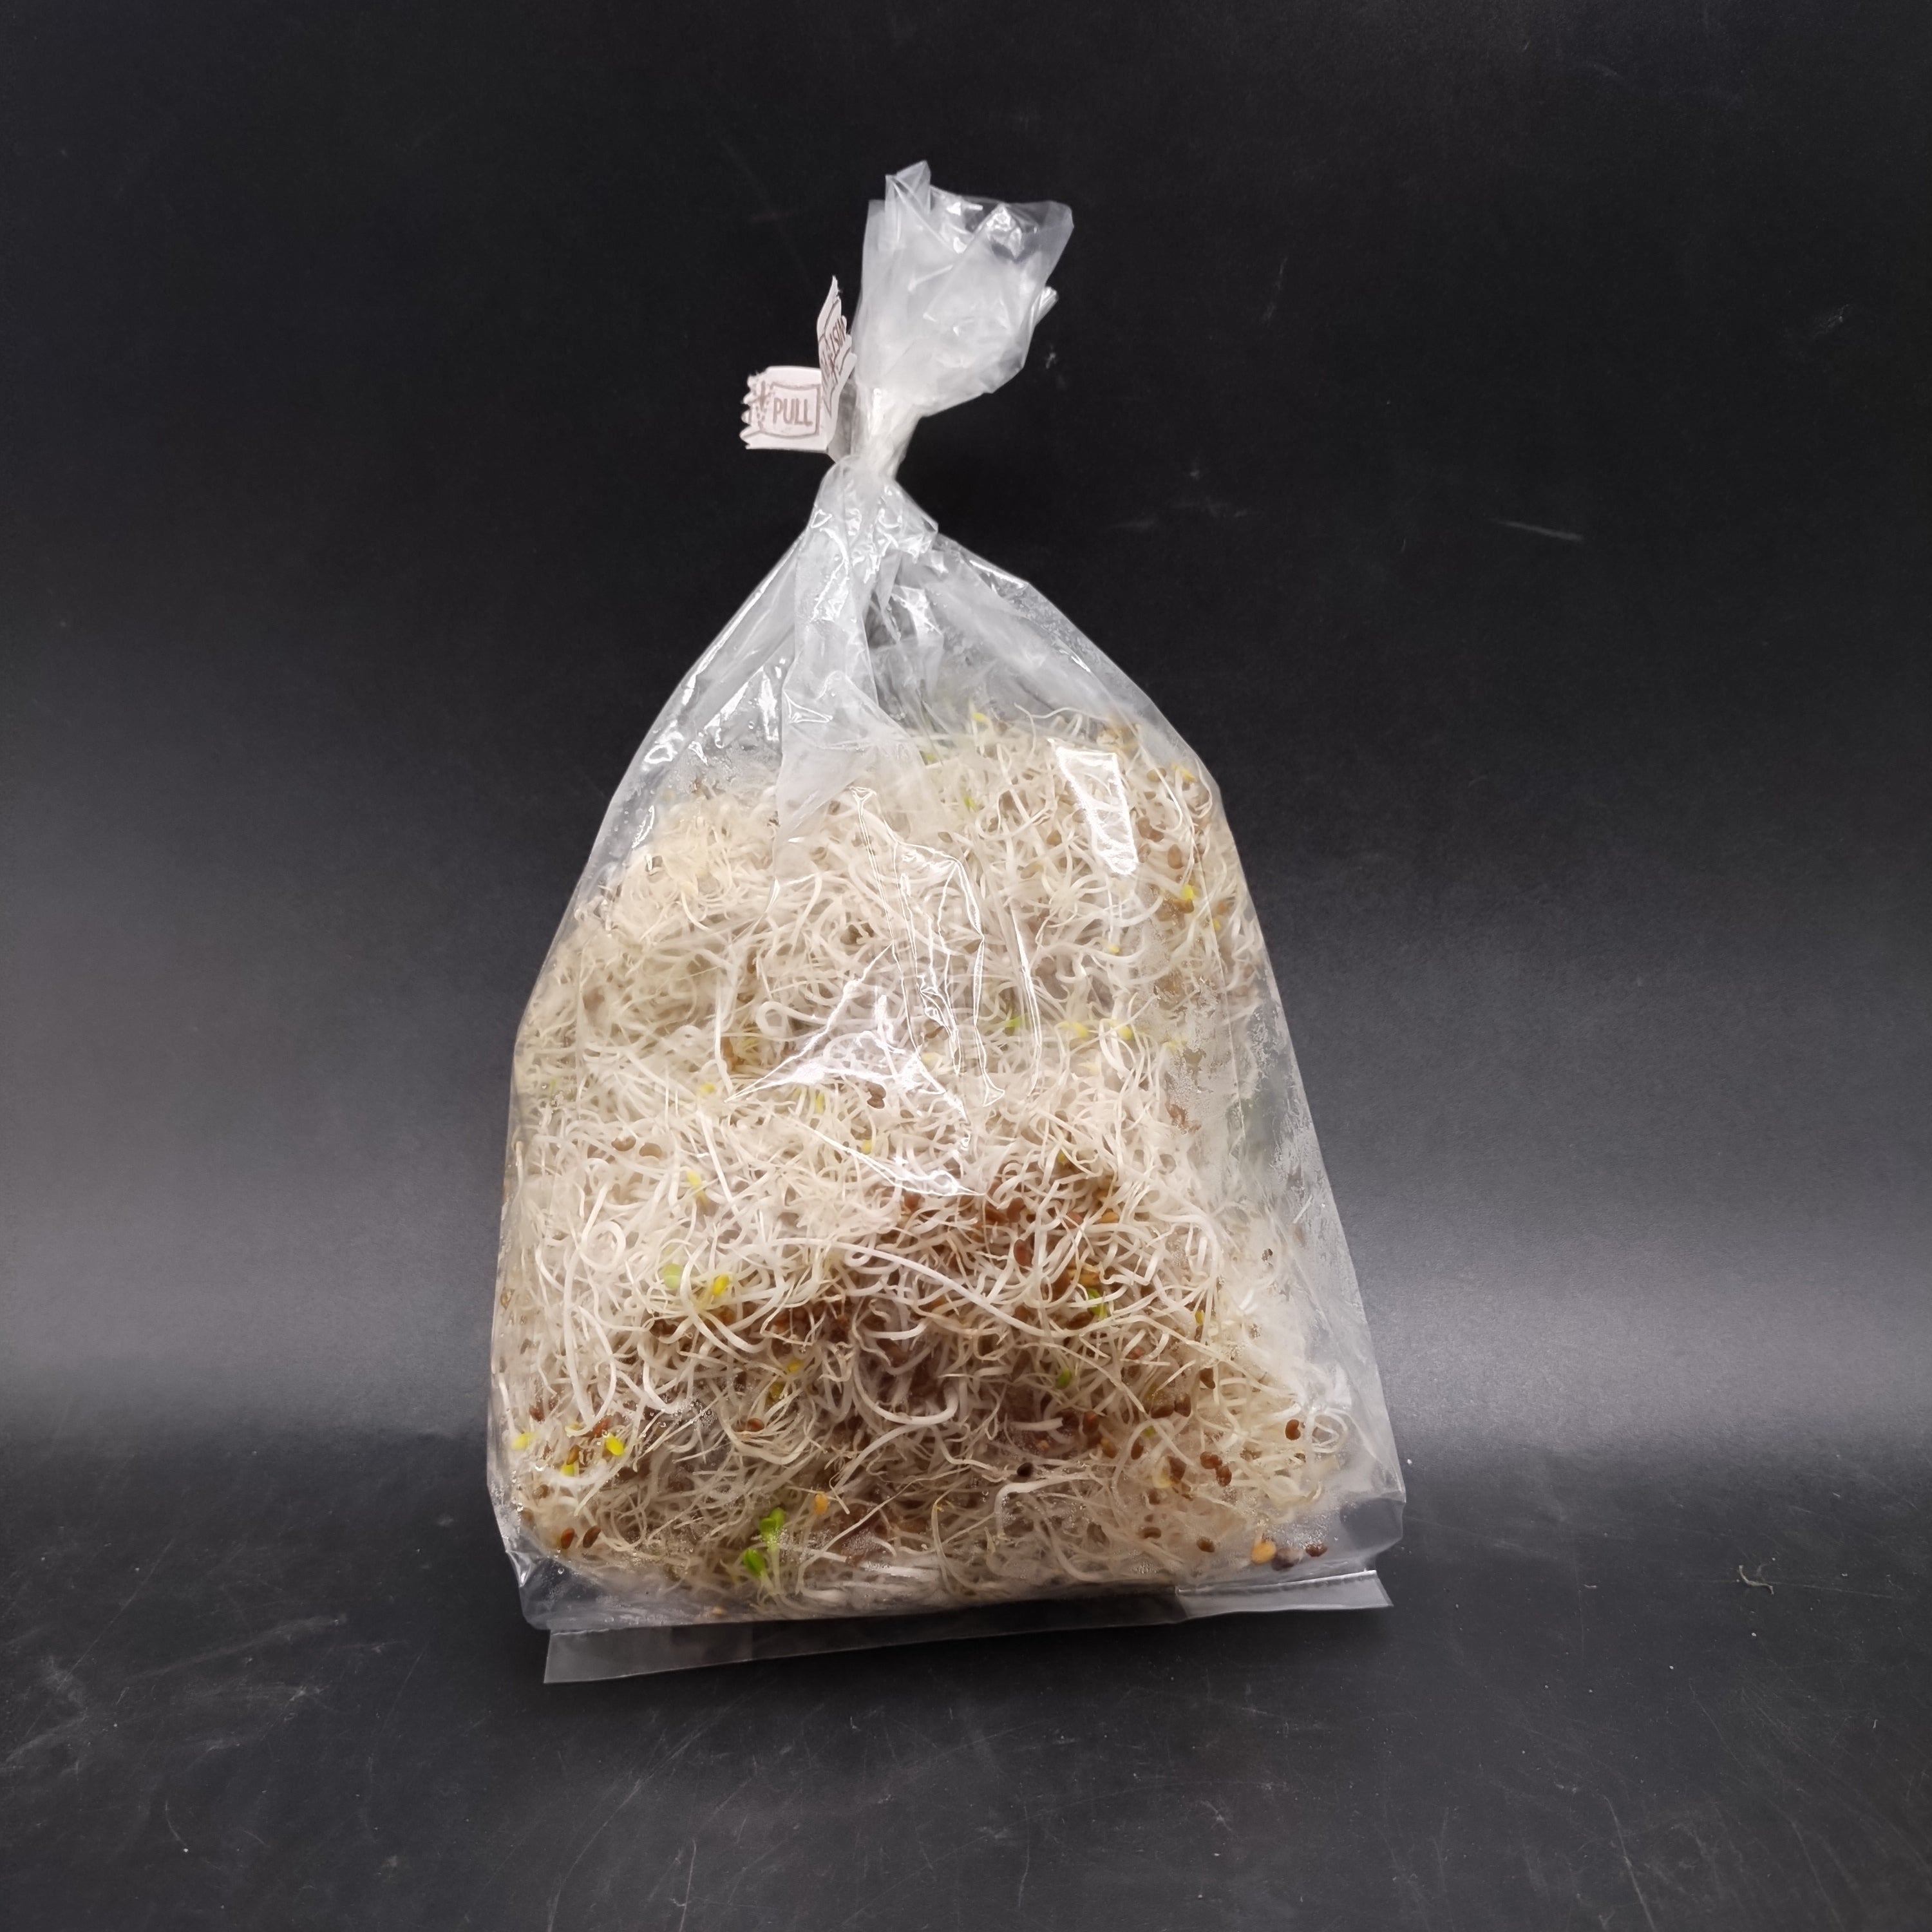 Alfalfa Sprouts (85g) ENJOY SOON